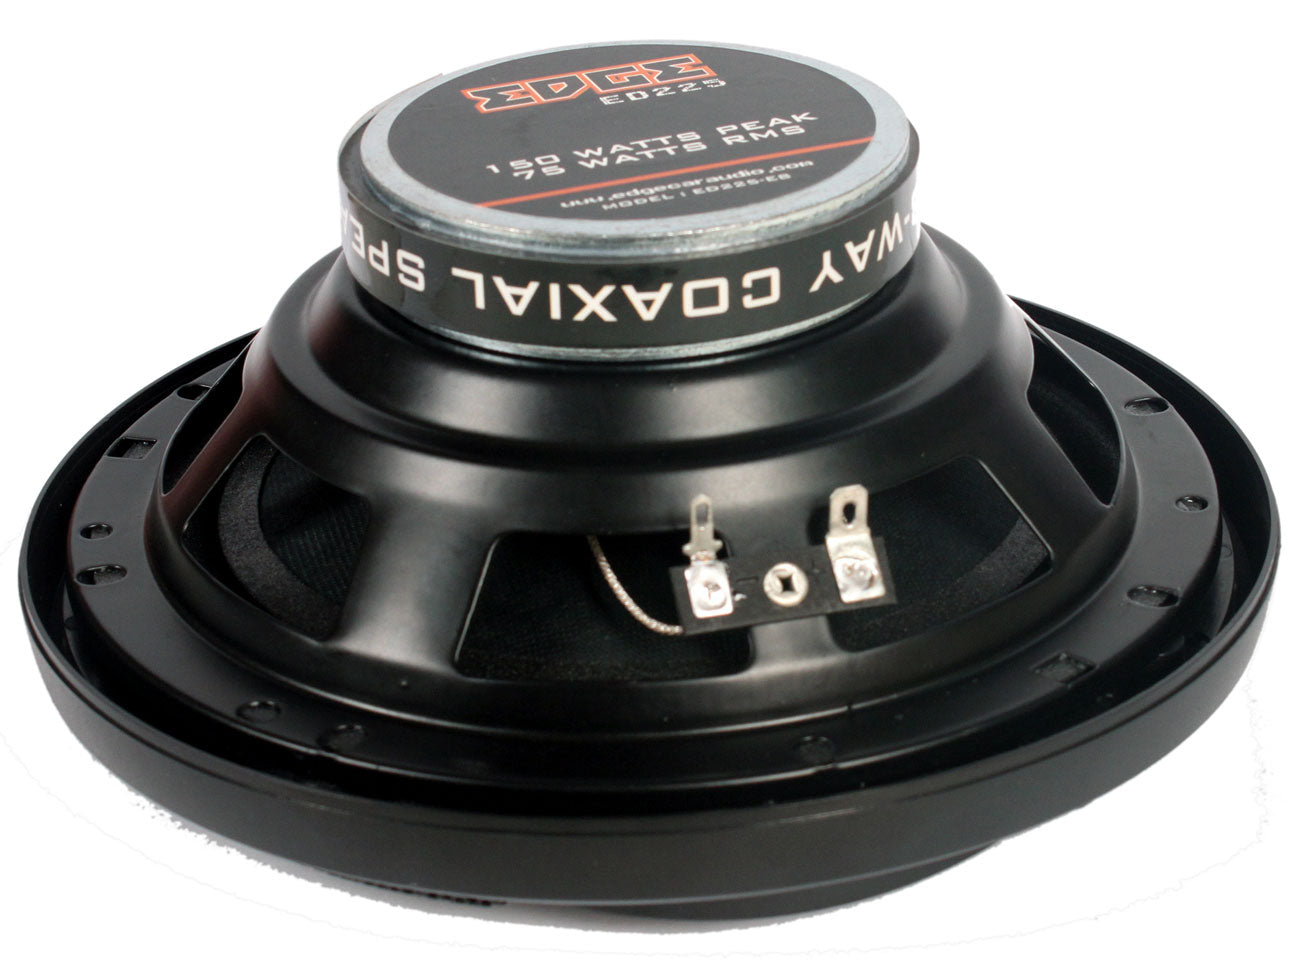 ED226-E8 | EDGE DB Series 6.5 inch 180 watts Coaxial Speakers - Pair